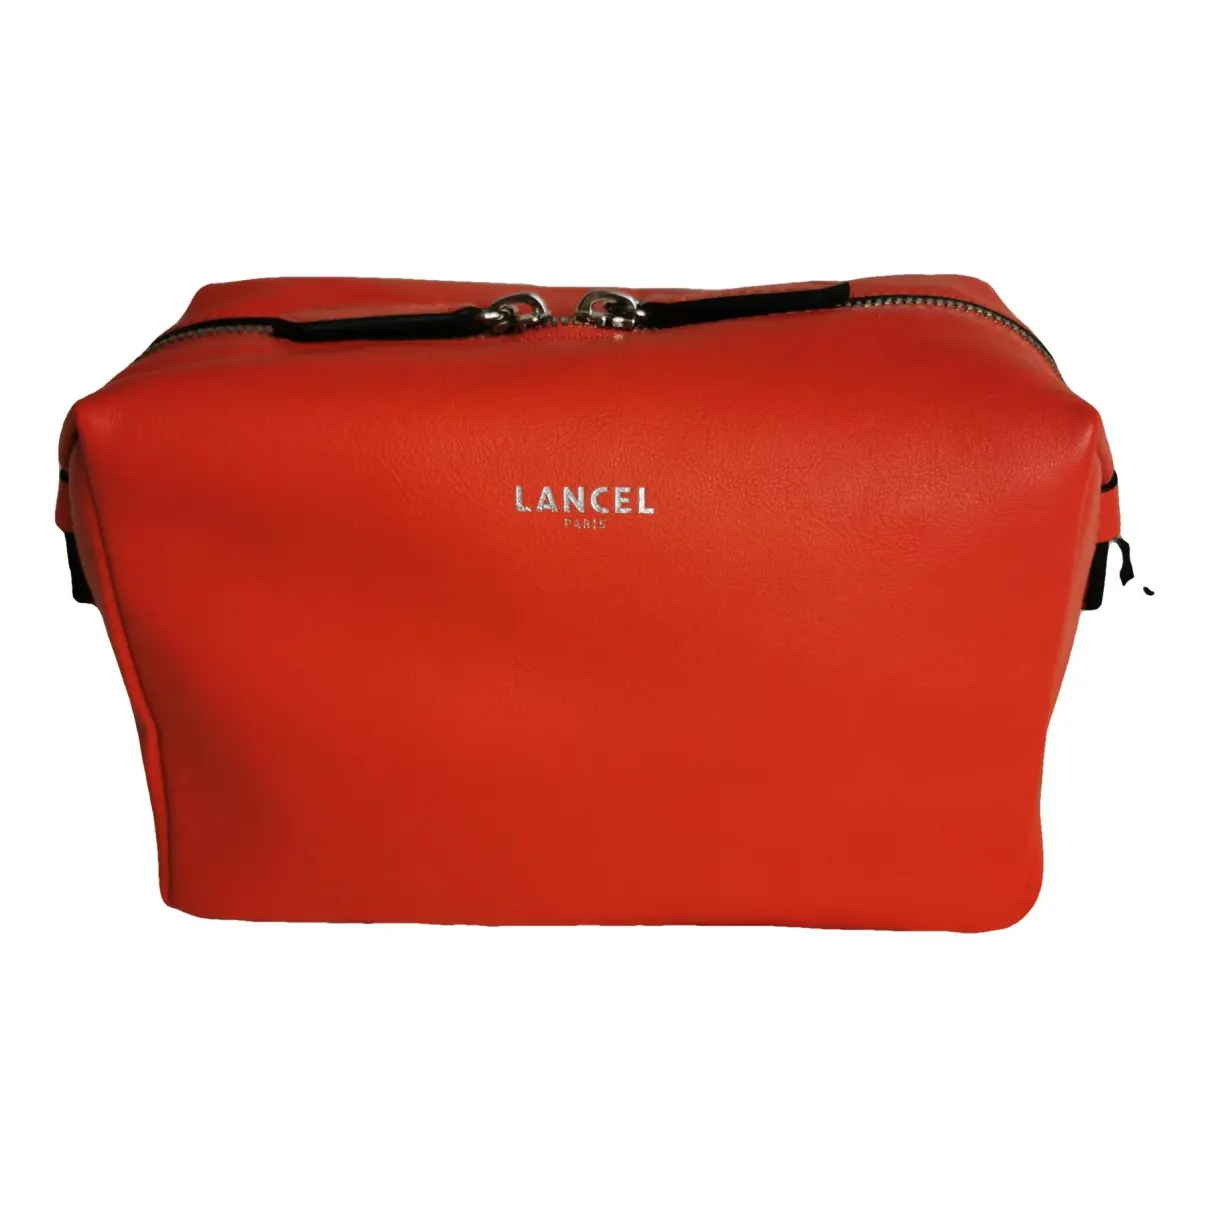 Leather clutch bag Lancel